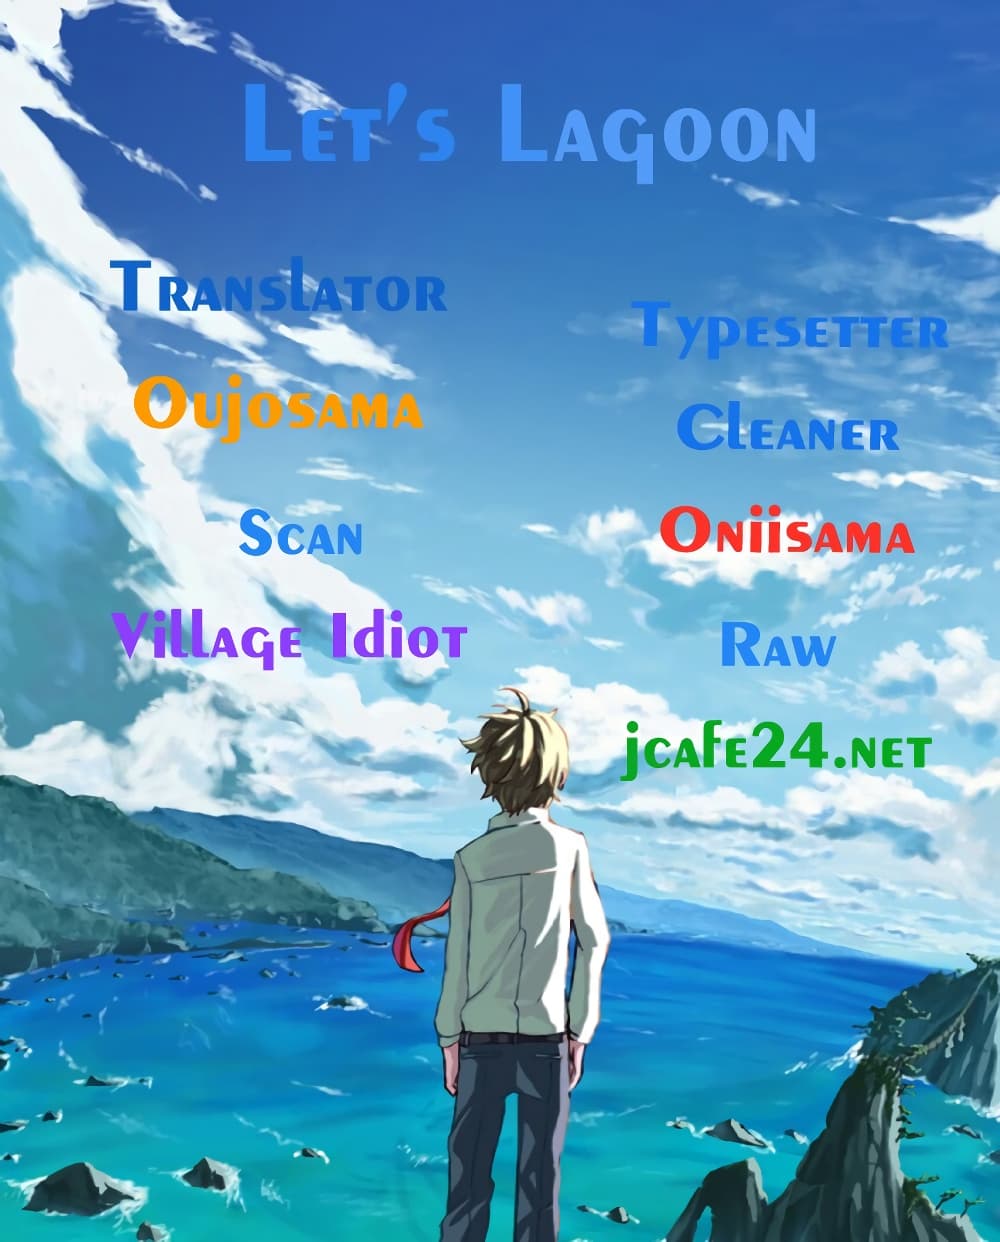 Let's Lagoon 17-17